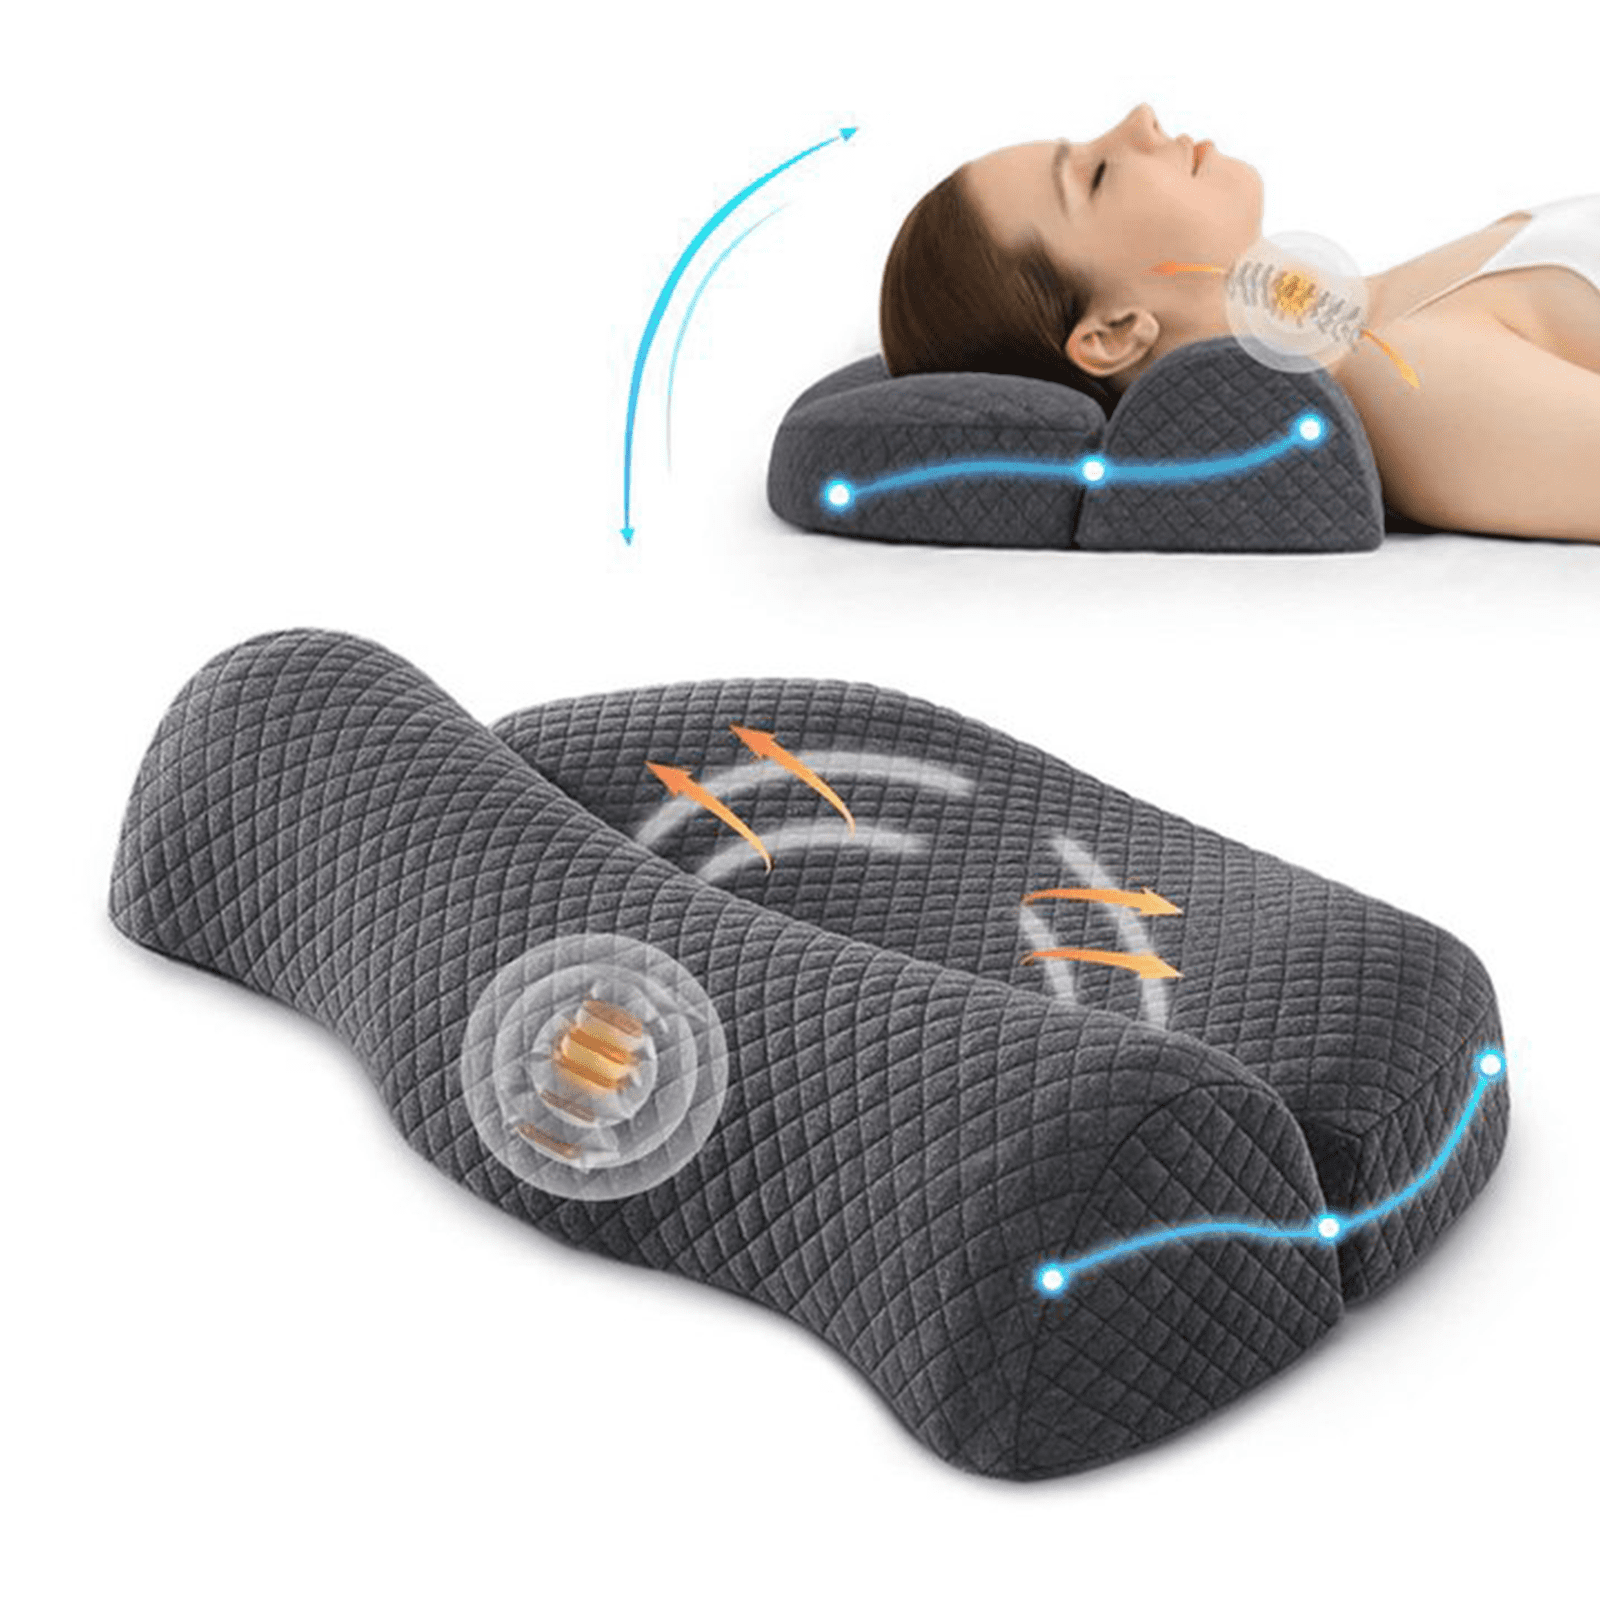 Donut Pillow Seat Cushion Anti-slip Memory Foam Tailbone Detachable And  Washable Hemorrhoids Pain Relief Cushion For Sciatica Back Leg Hip Pai Man  Jia